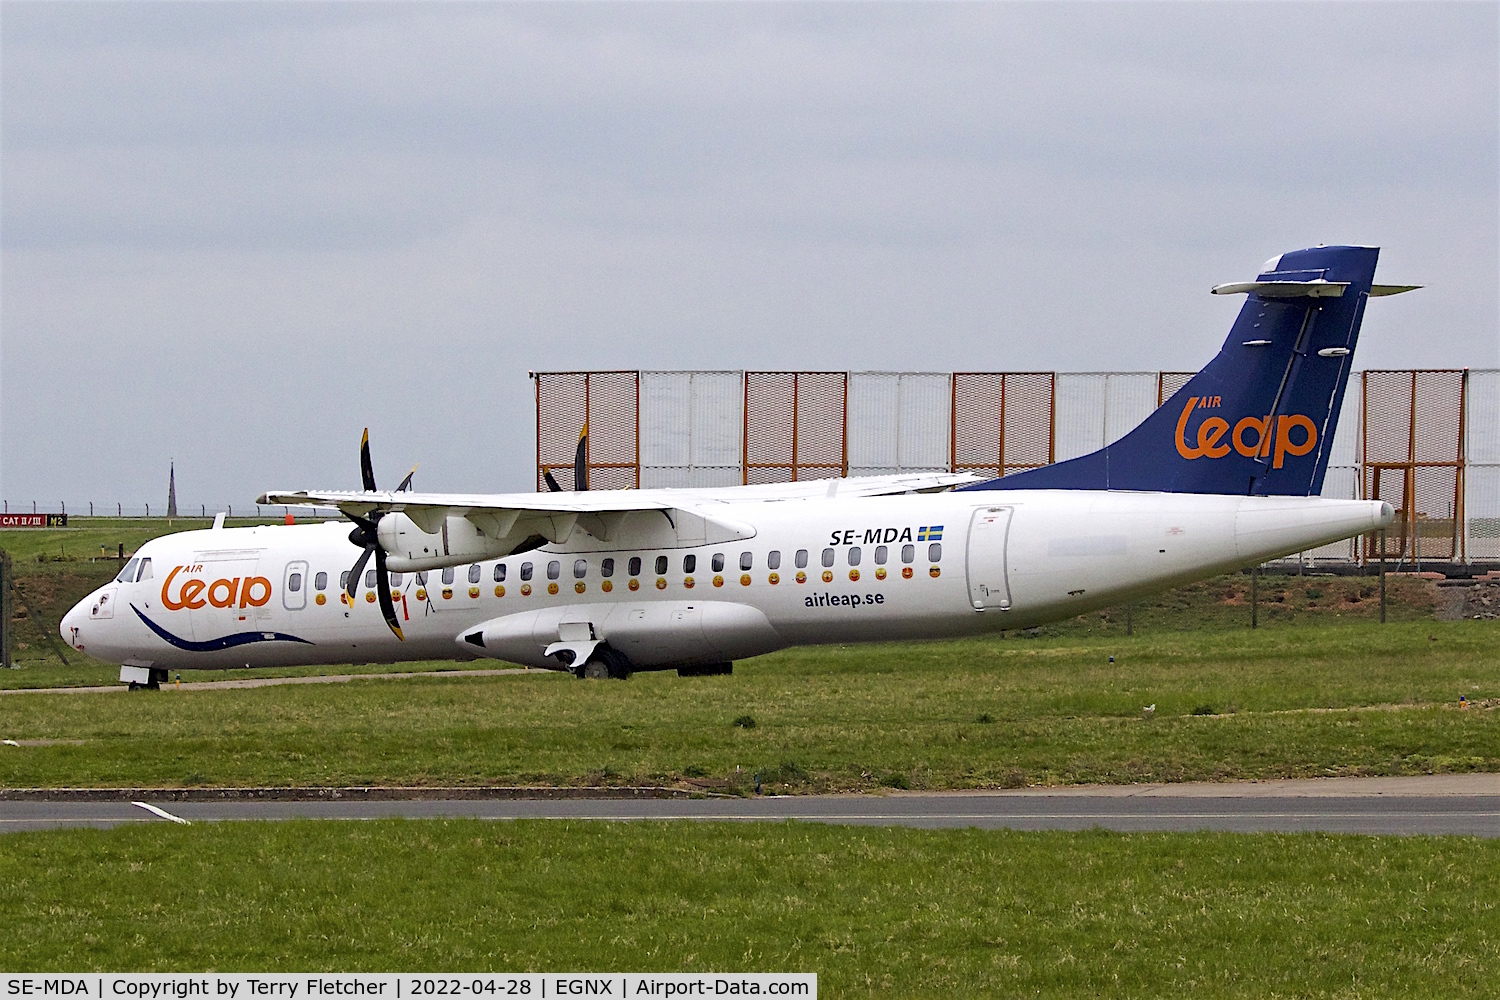 SE-MDA, 2008 ATR 72-212A C/N 778, SE-MDA Air Leap ATR 72-500 (72-212A) ; Manufacturer Serial Number (MSN). 778 at East Midlands Airport